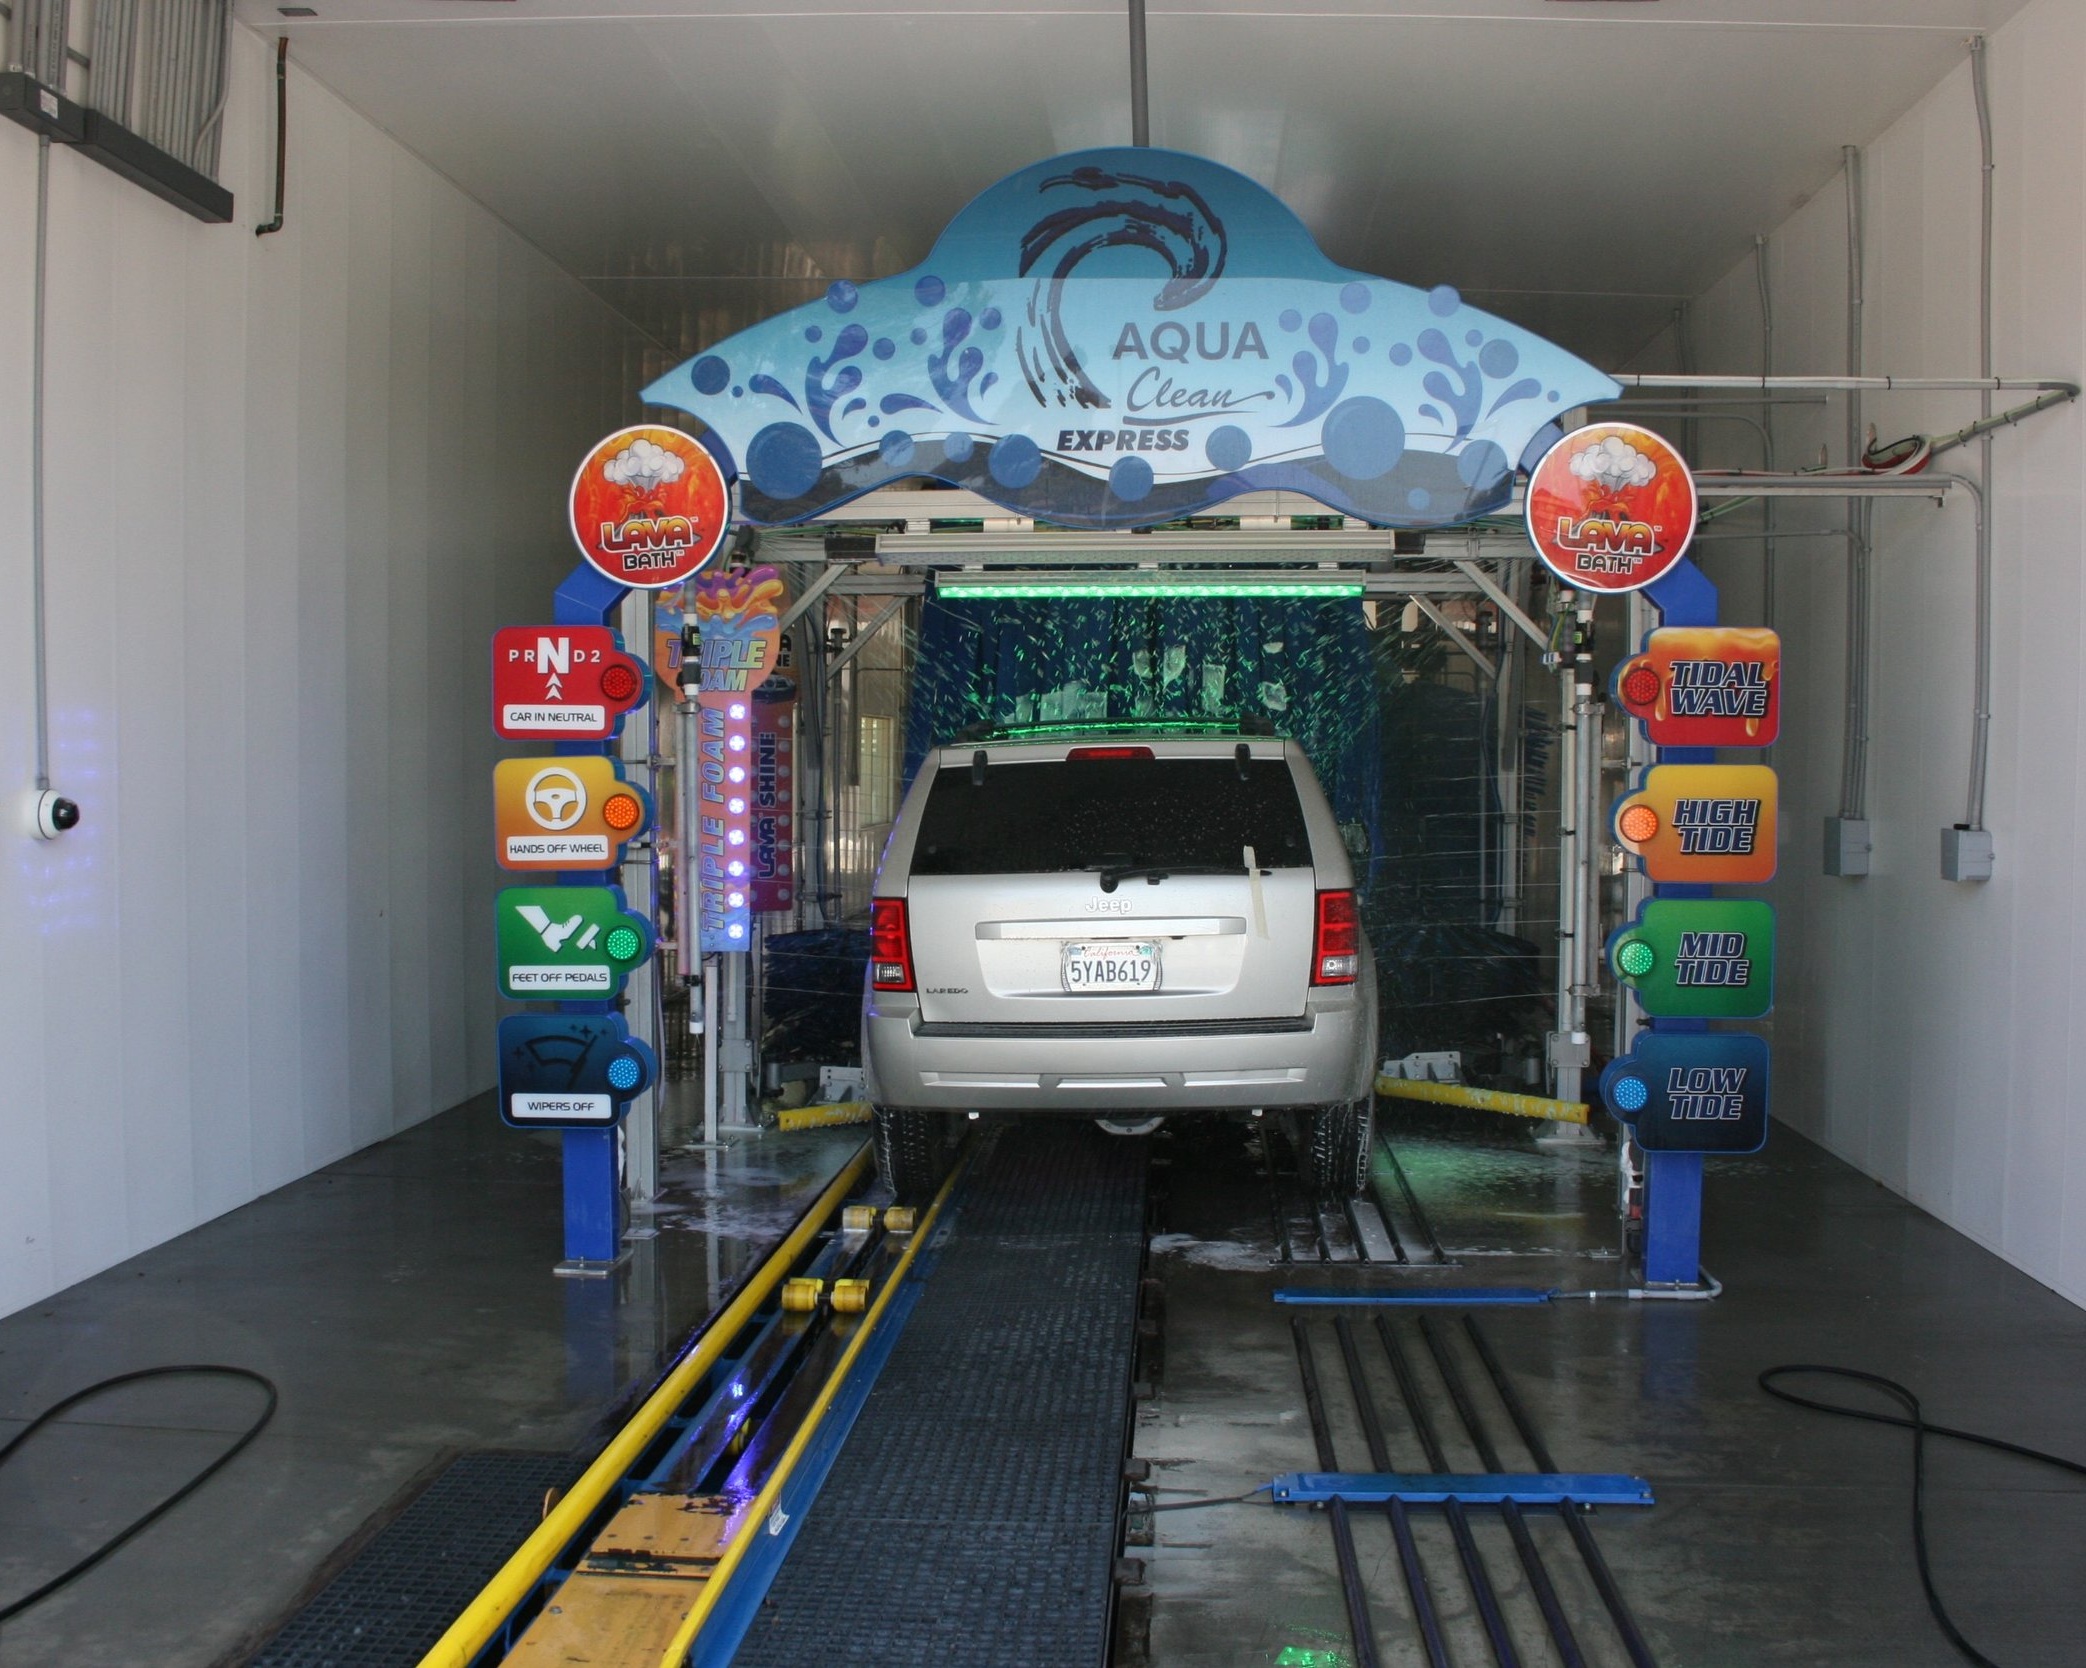 safari falls car wash #6 danville service